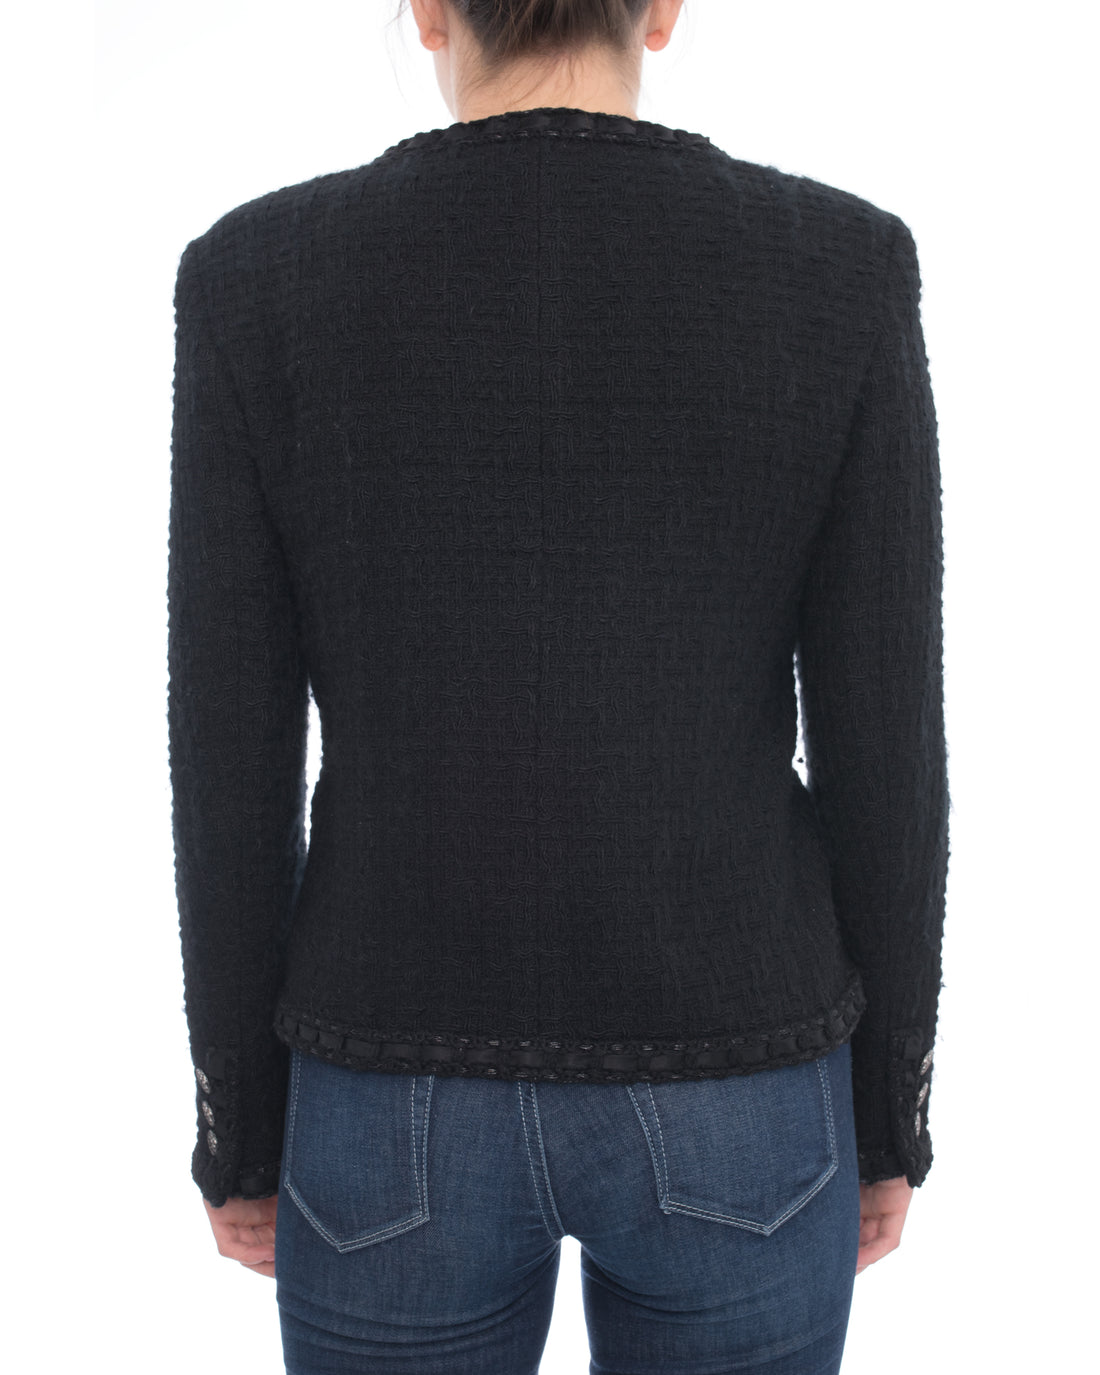 Chanel 2016 Classic Black Tweed Jacket - FR 42 (USA 10)